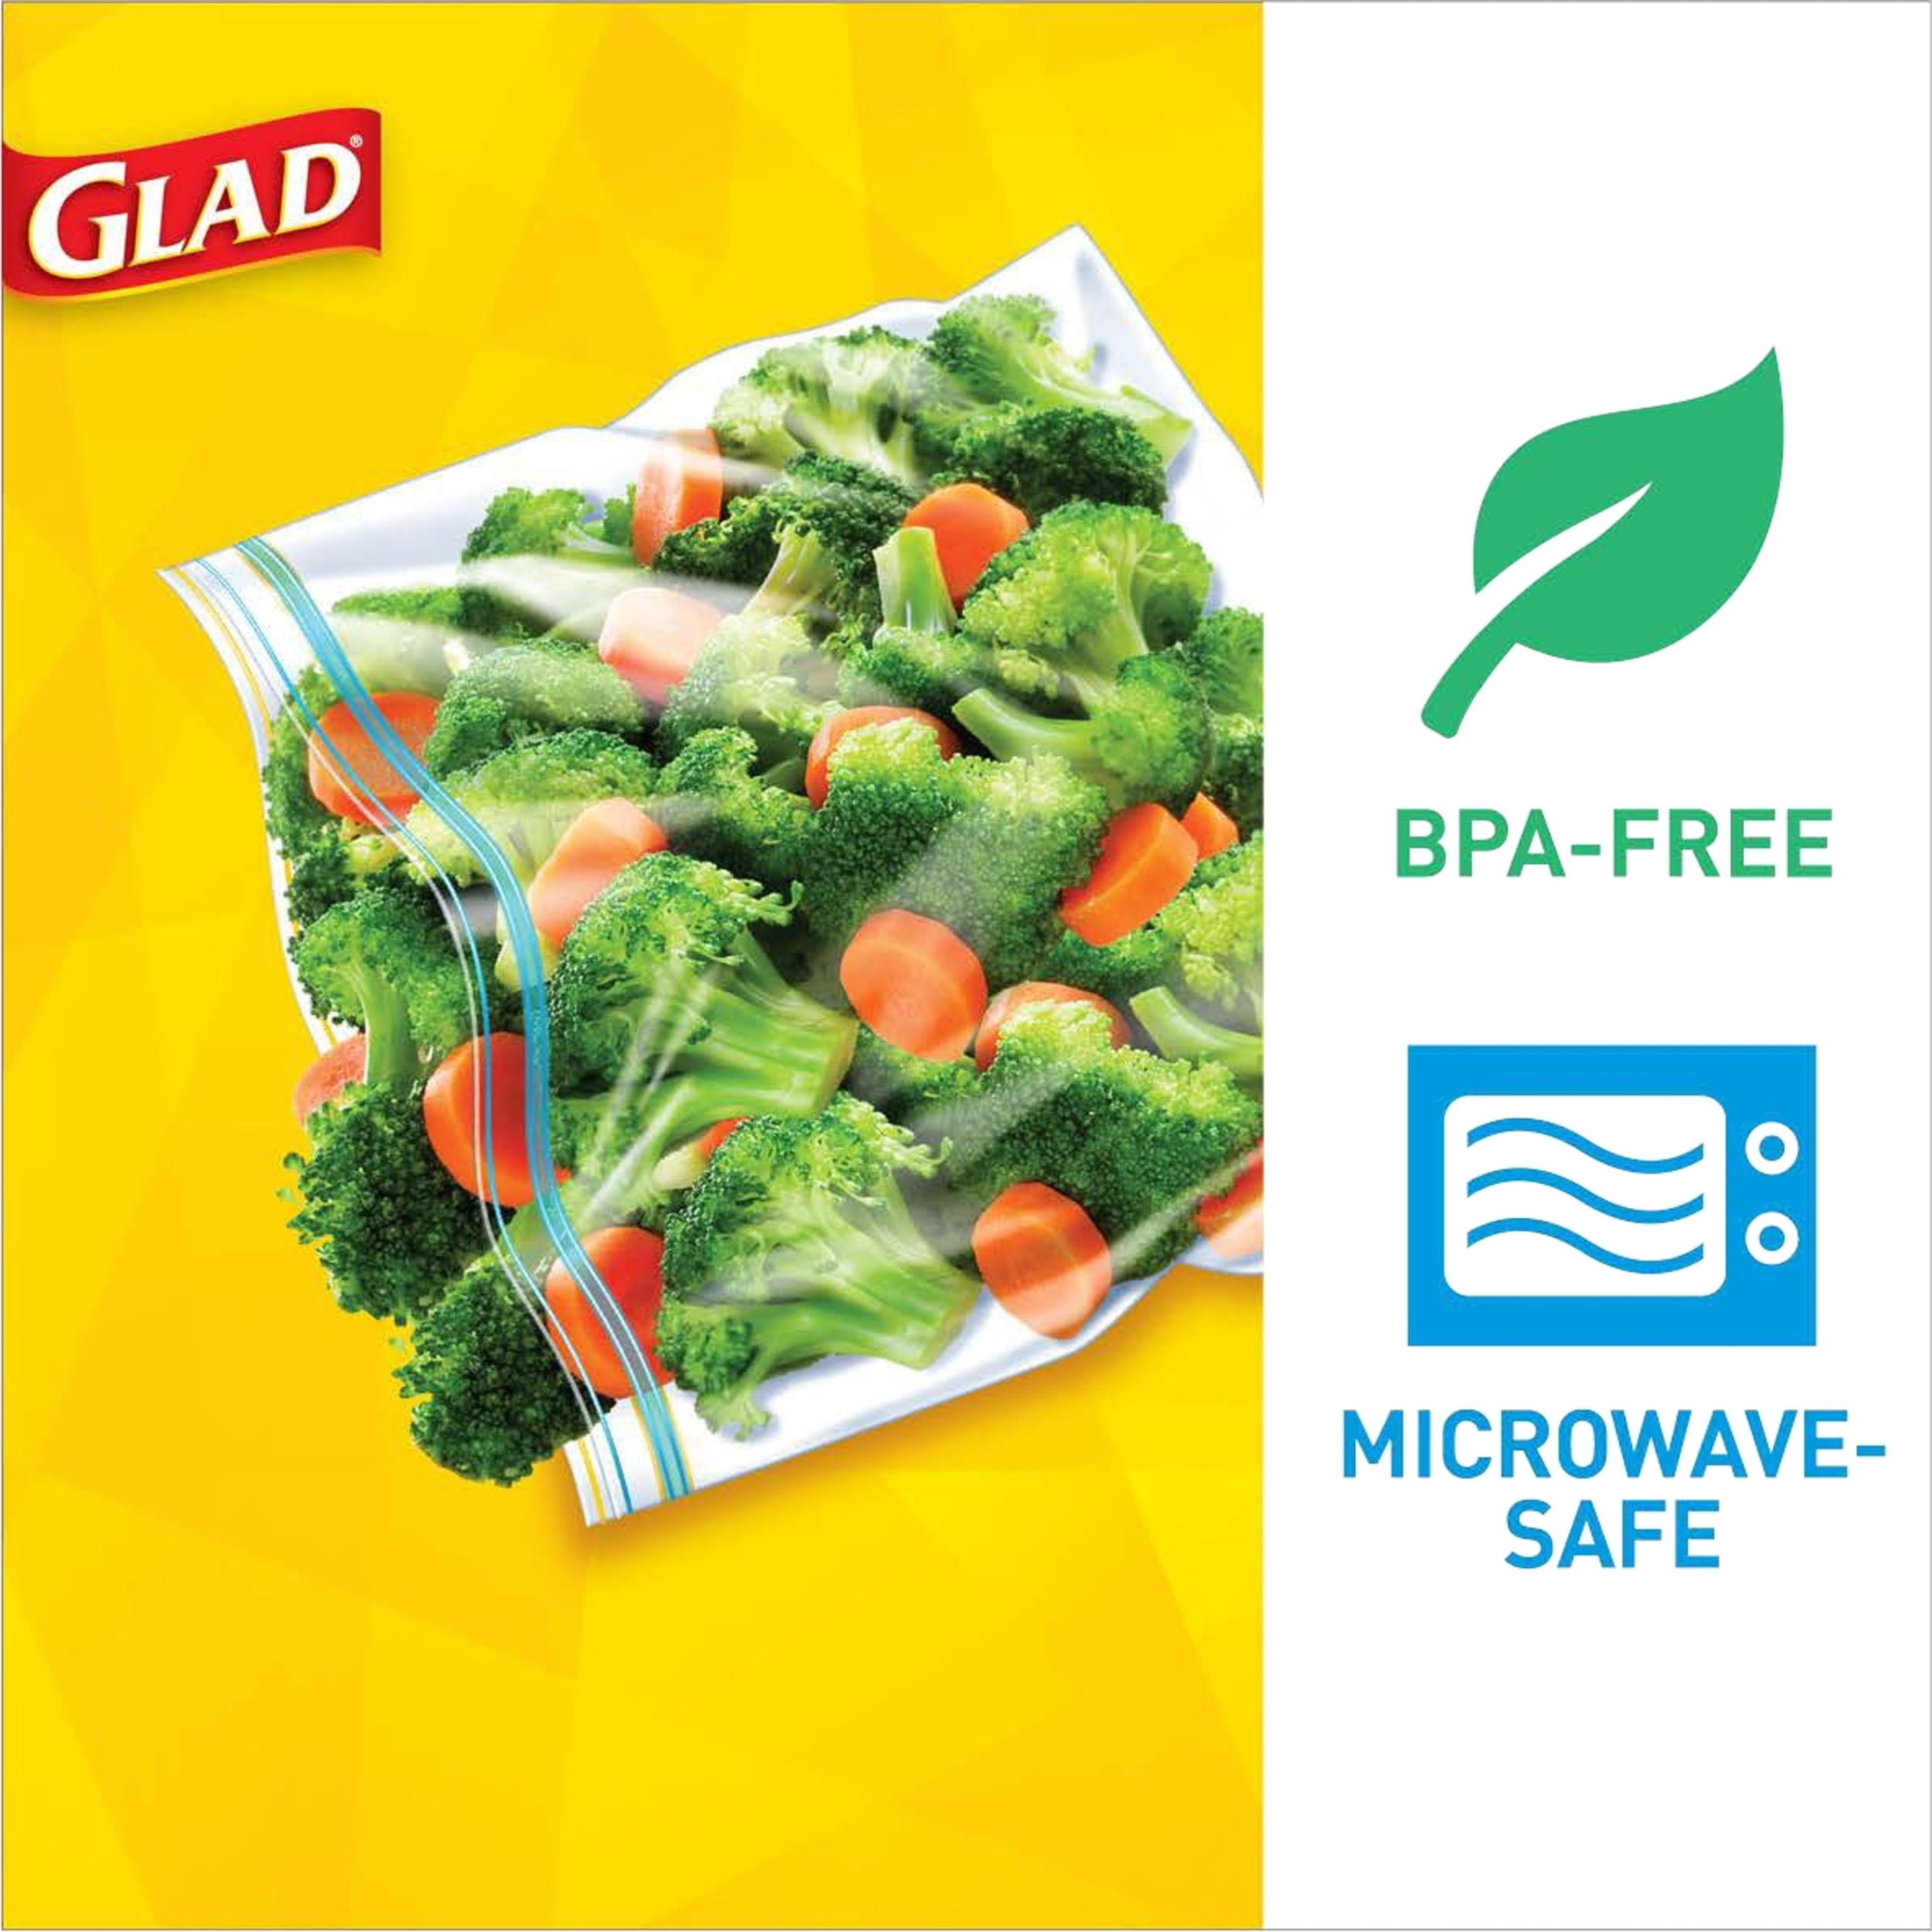  Glad Zipper Food Storage Freezer Bags - Quart - 20